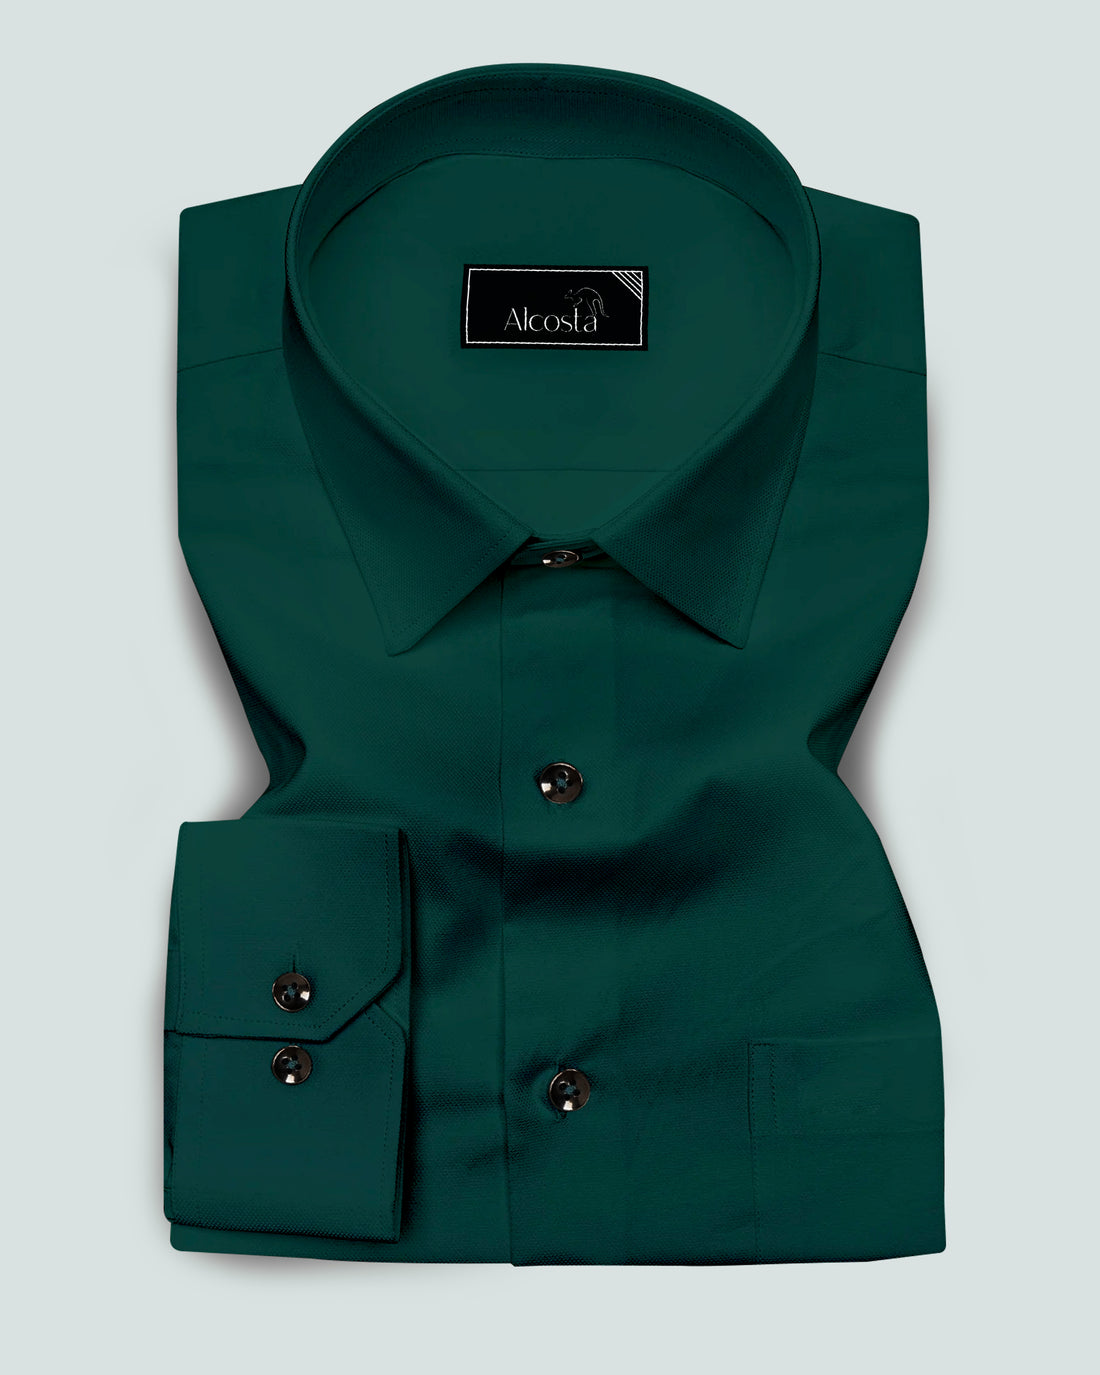 Combo of 2 Check shirt & Dark green shirt